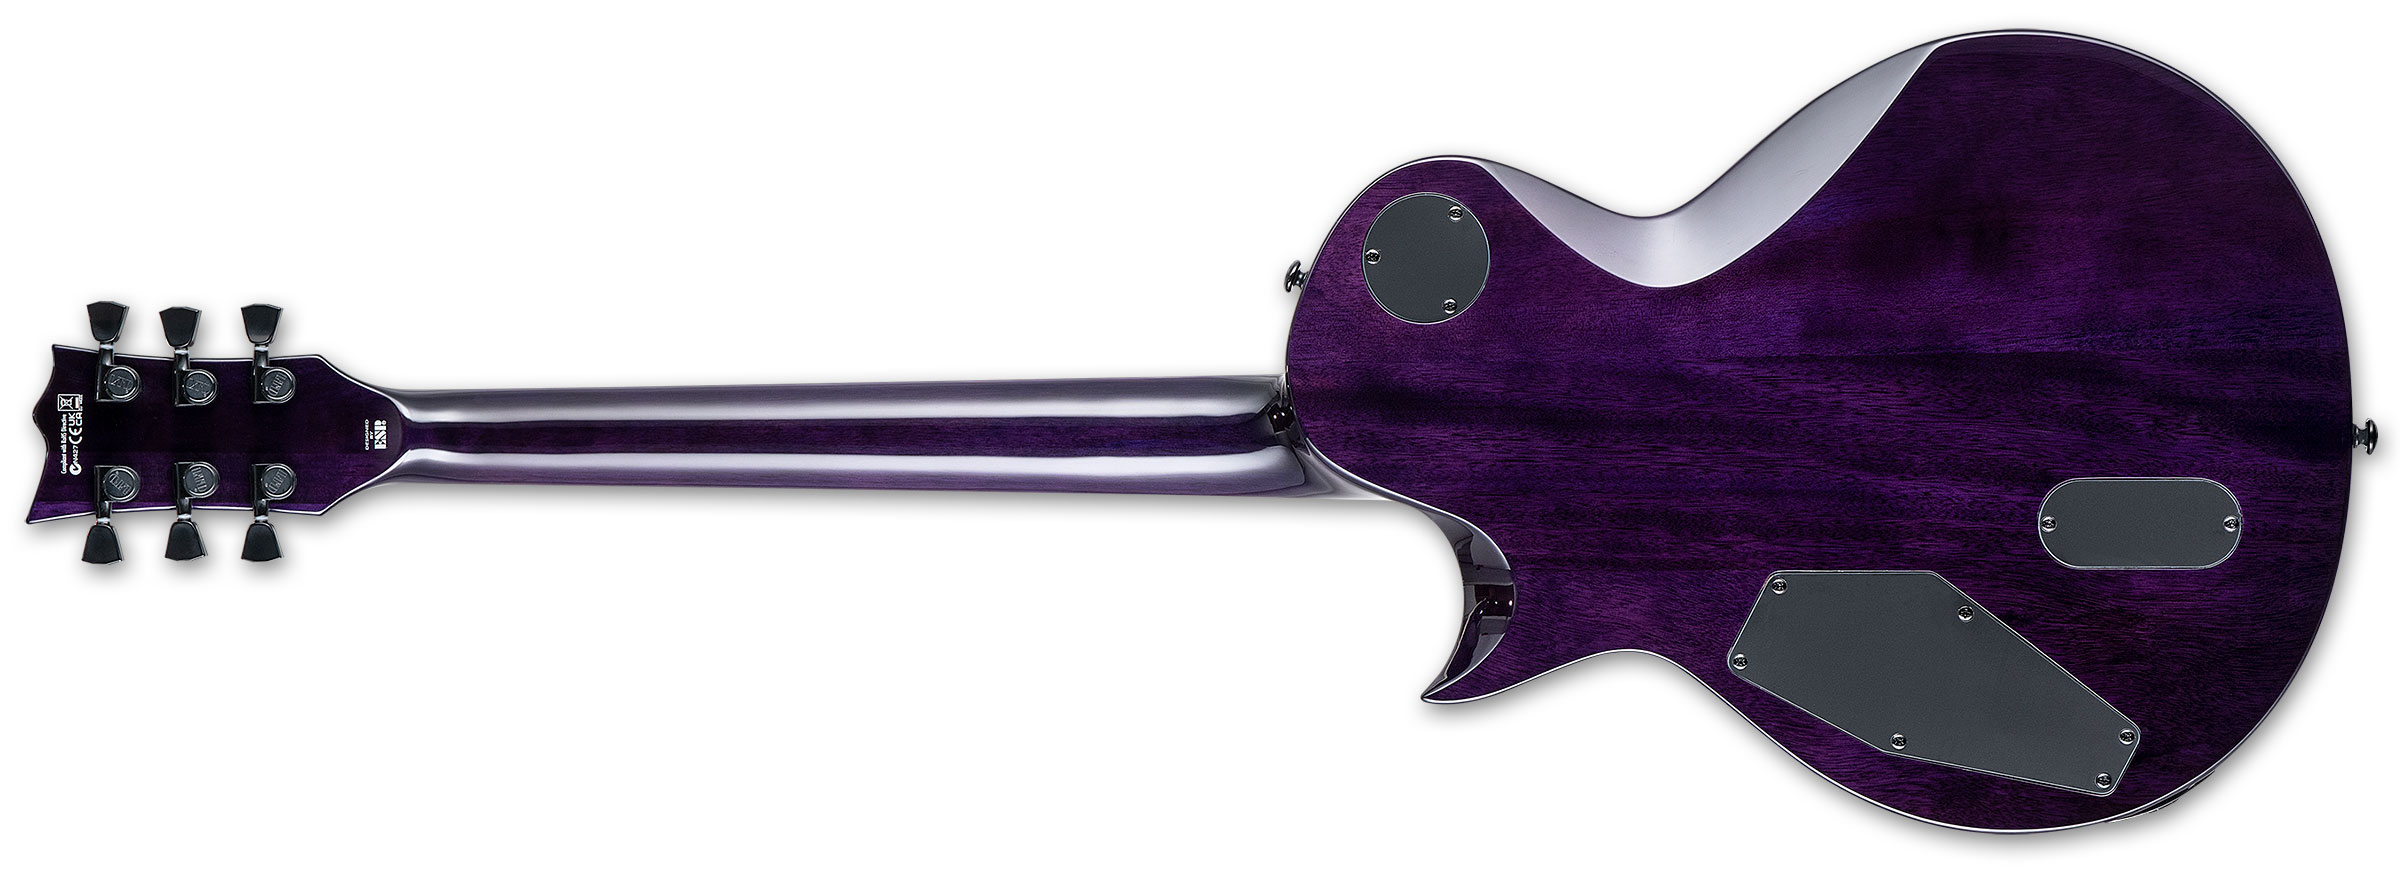 Ltd Ec-1000 Hh Ht Emg Eb - See Thru Purple Sunburst - Single cut electric guitar - Variation 2